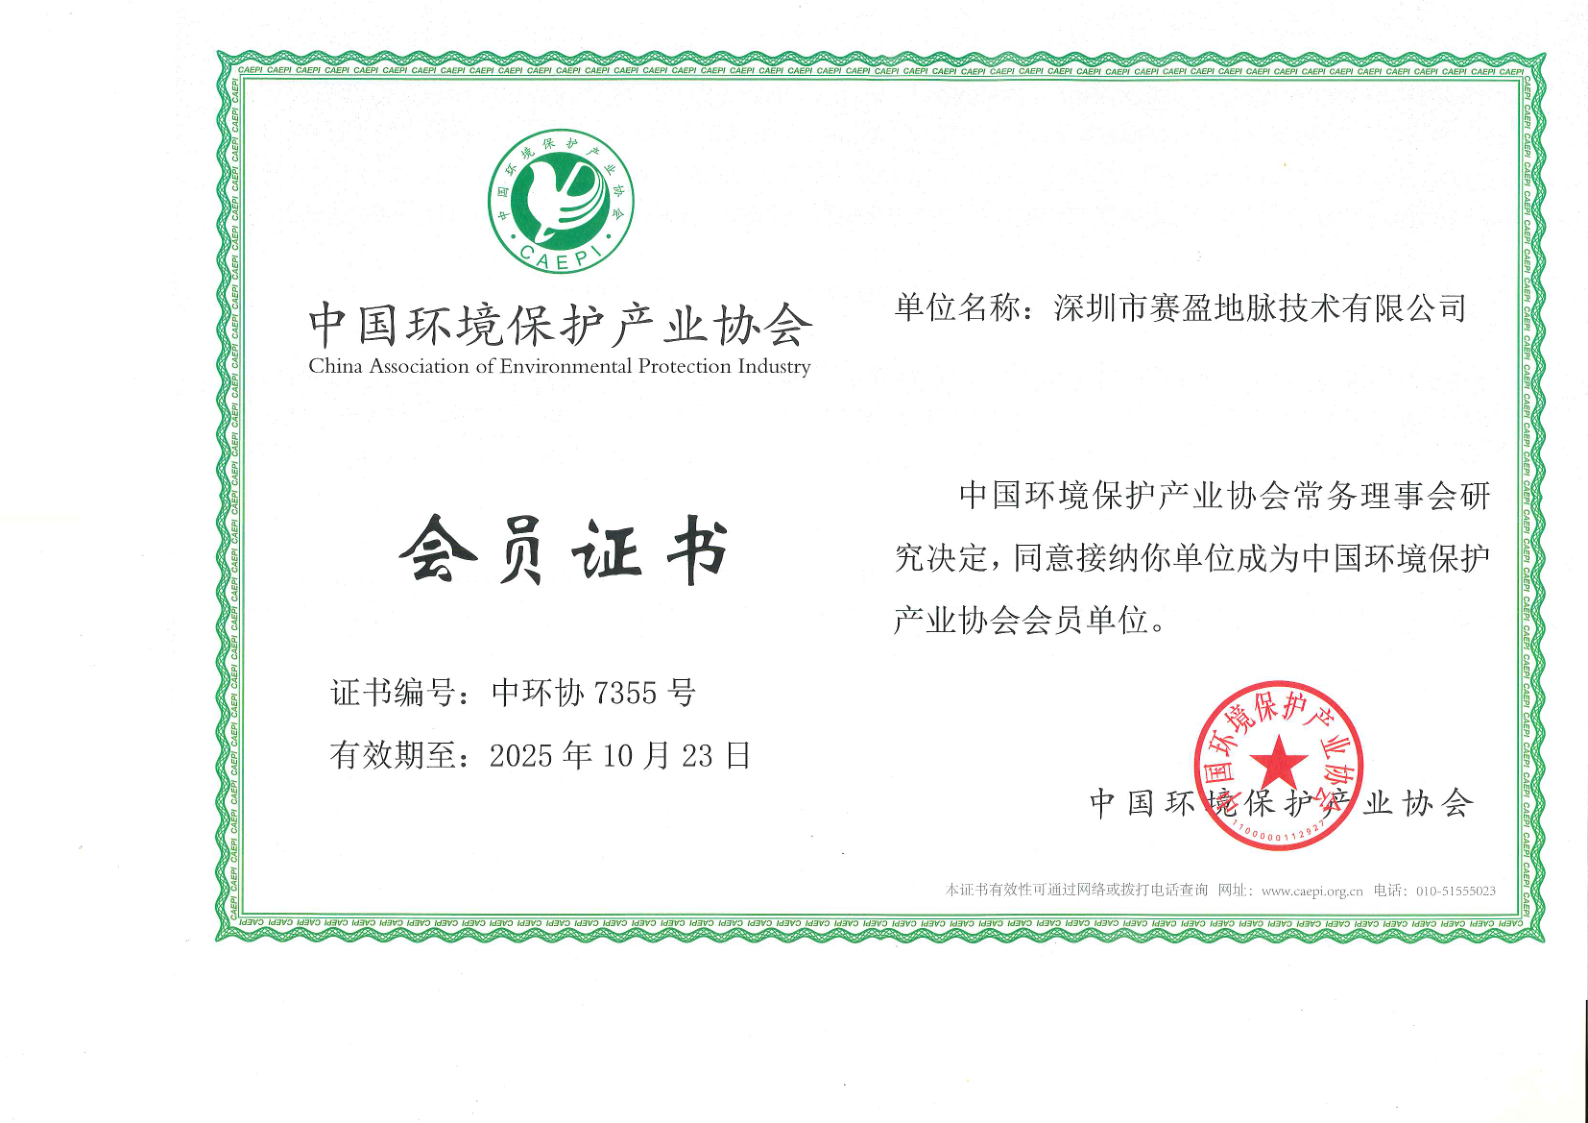 Membership Certificate of China Environmental Protection Association